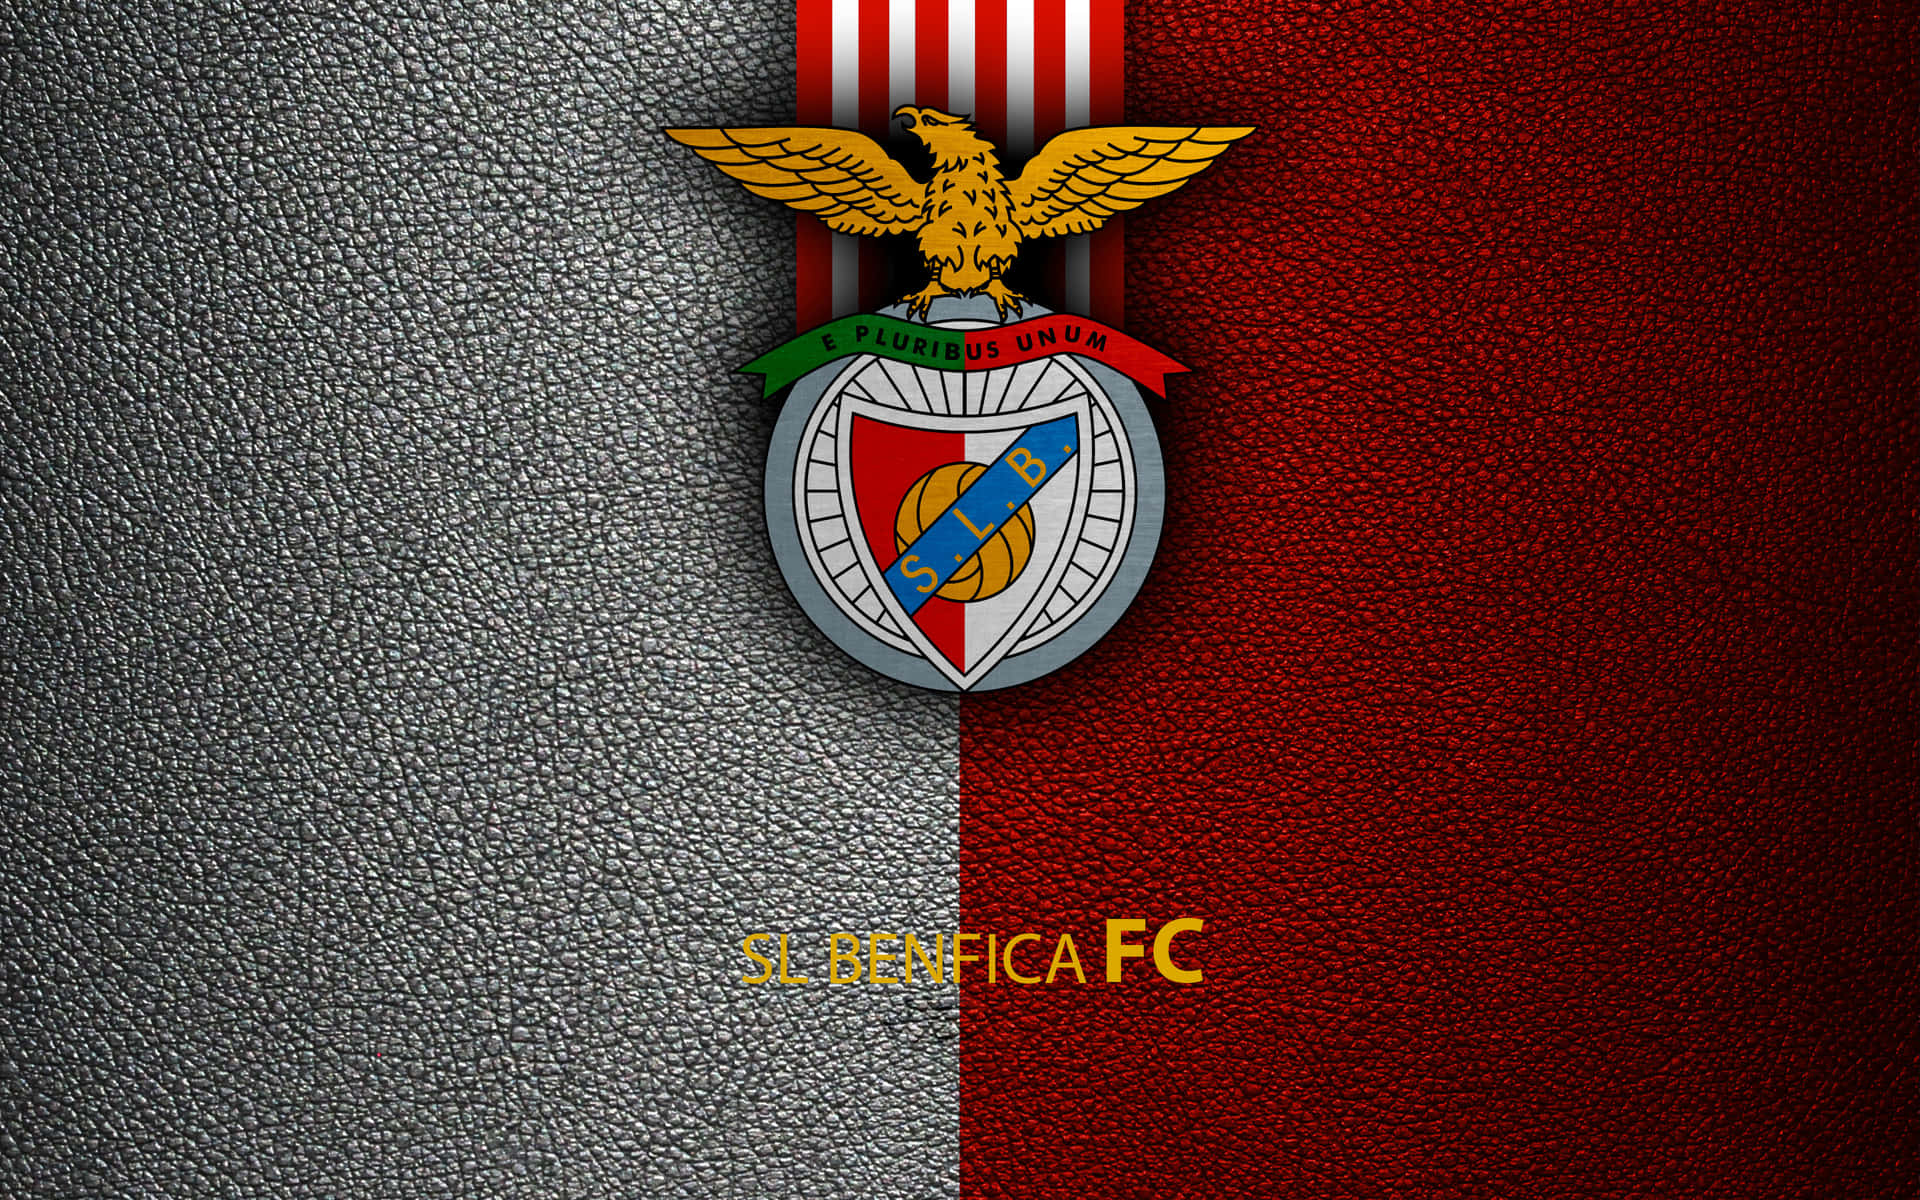 S L Benfica F C Creston Textured Background Wallpaper